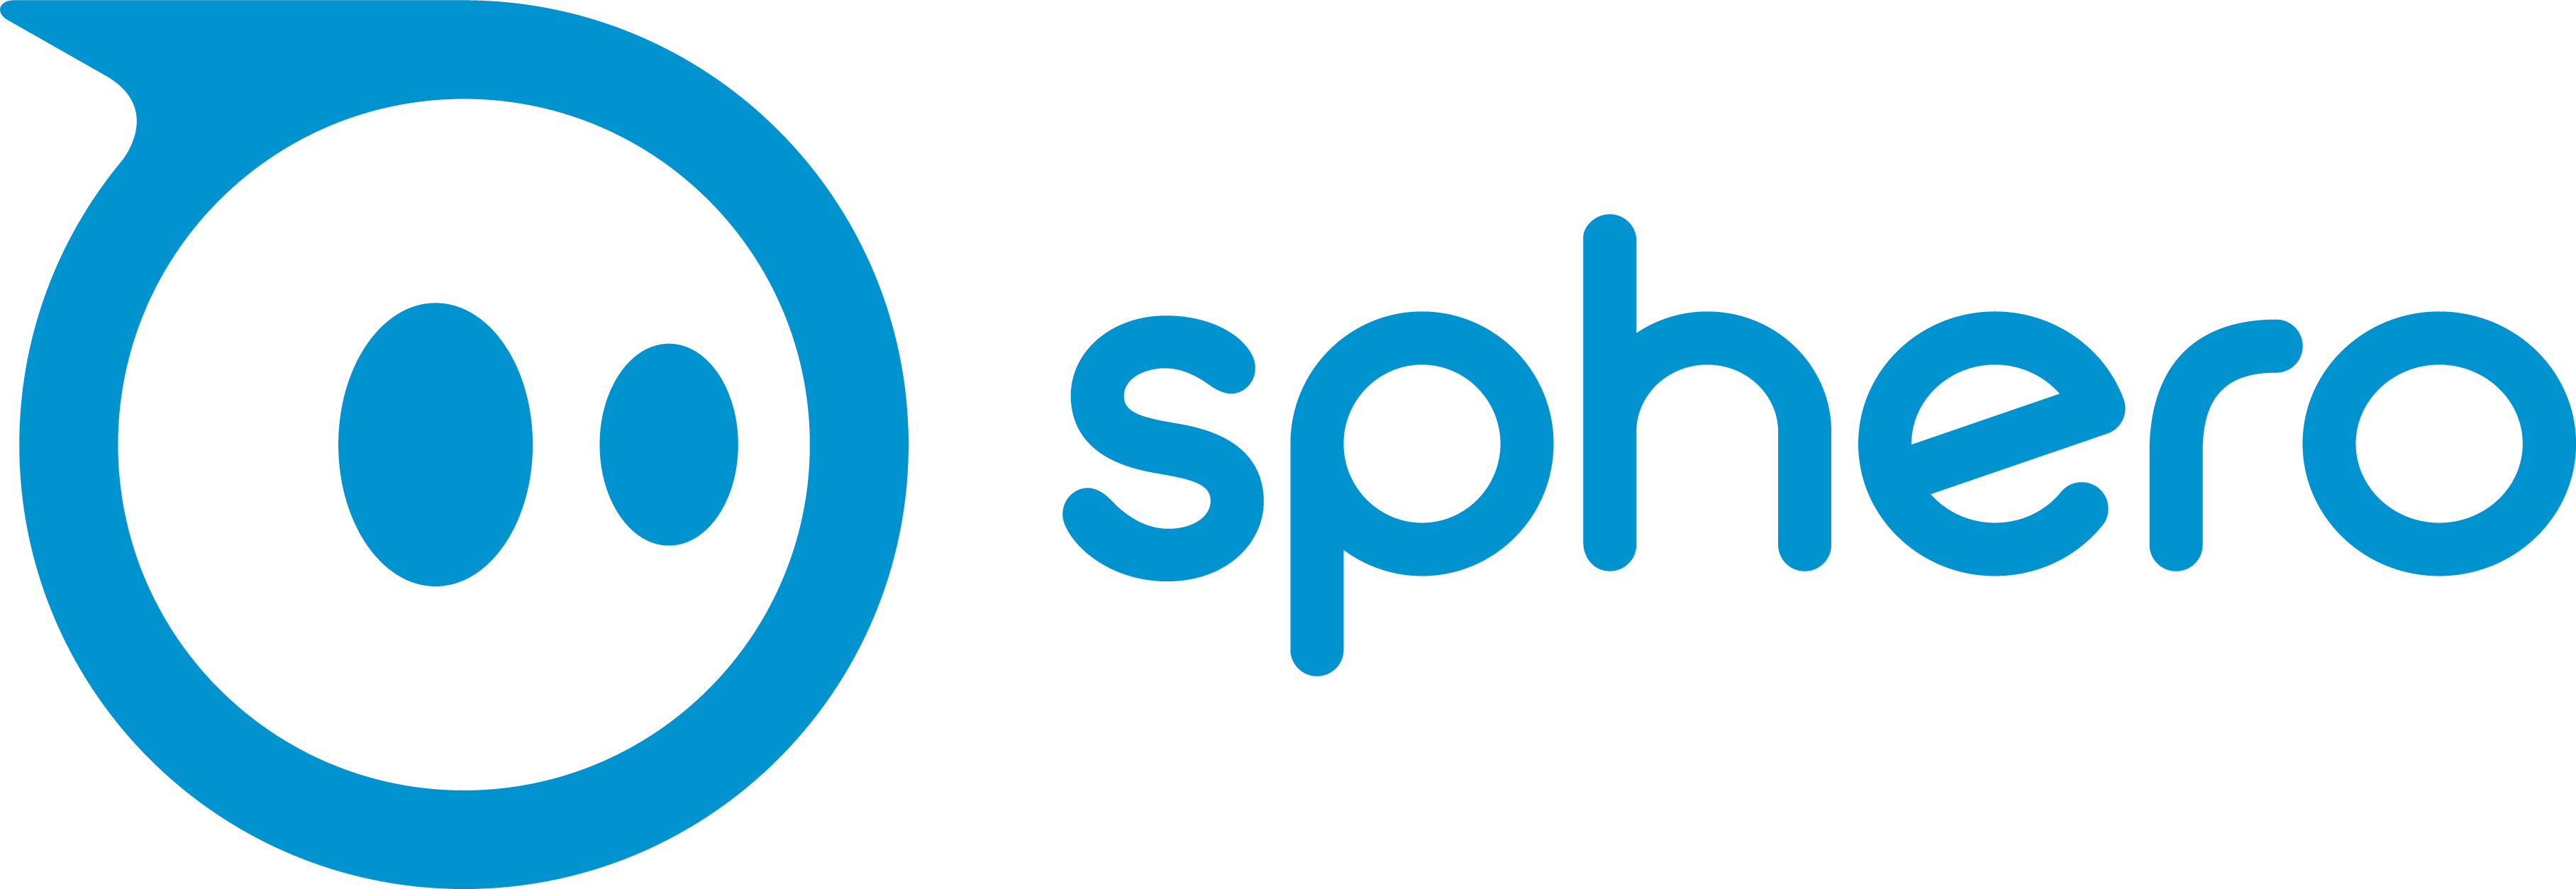 sphero-logo-blue